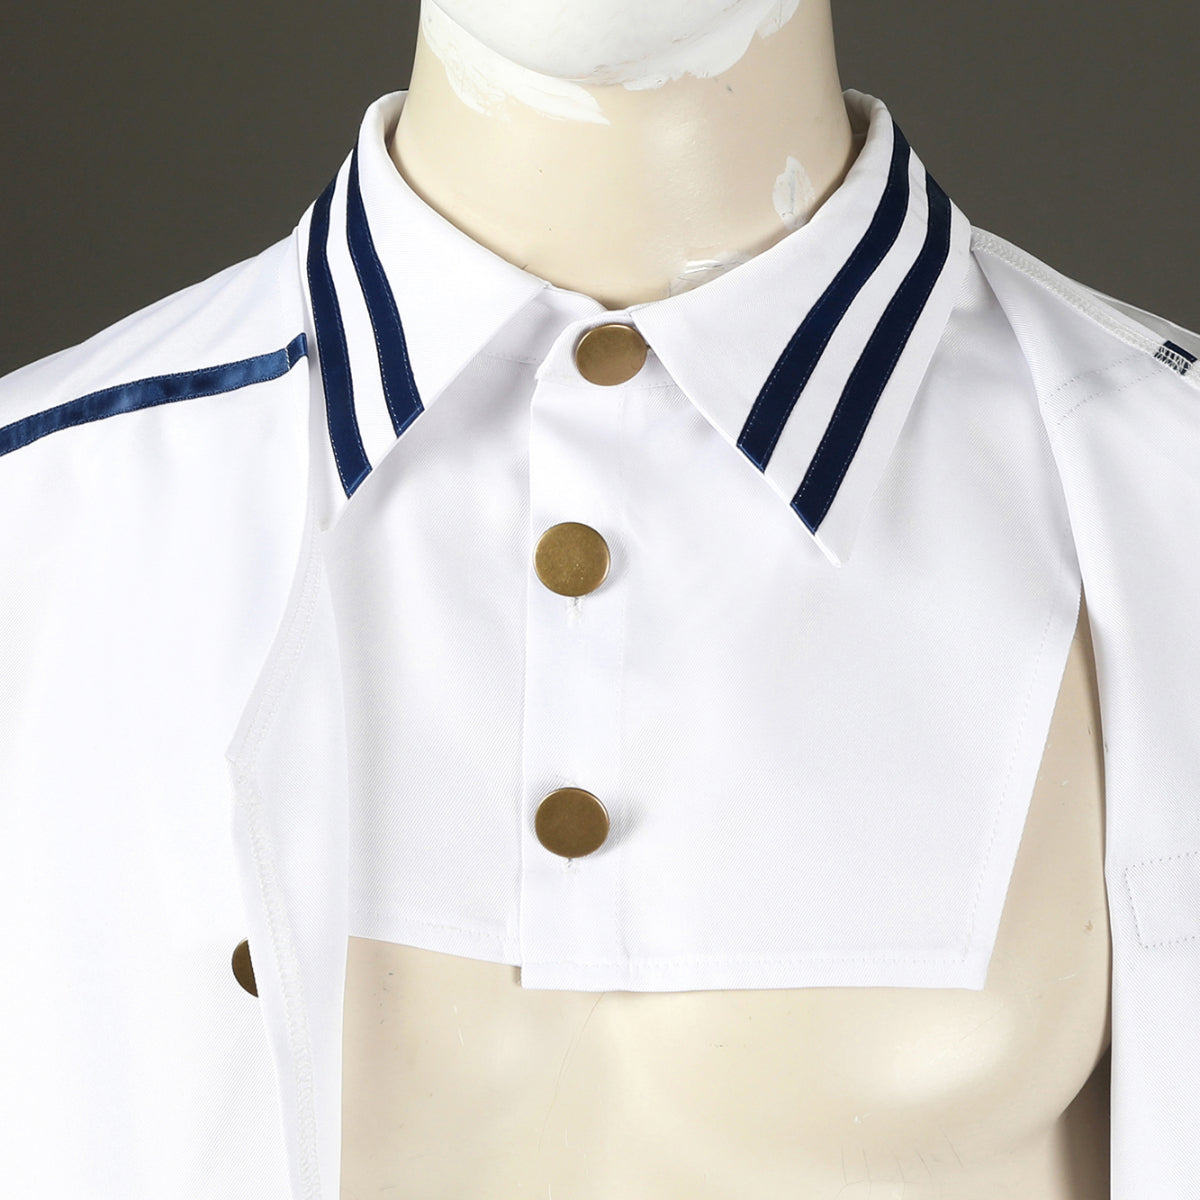 ONE PIECE Movie Season 1 Koby Navy Uniform Full Set Cosplay Costumes